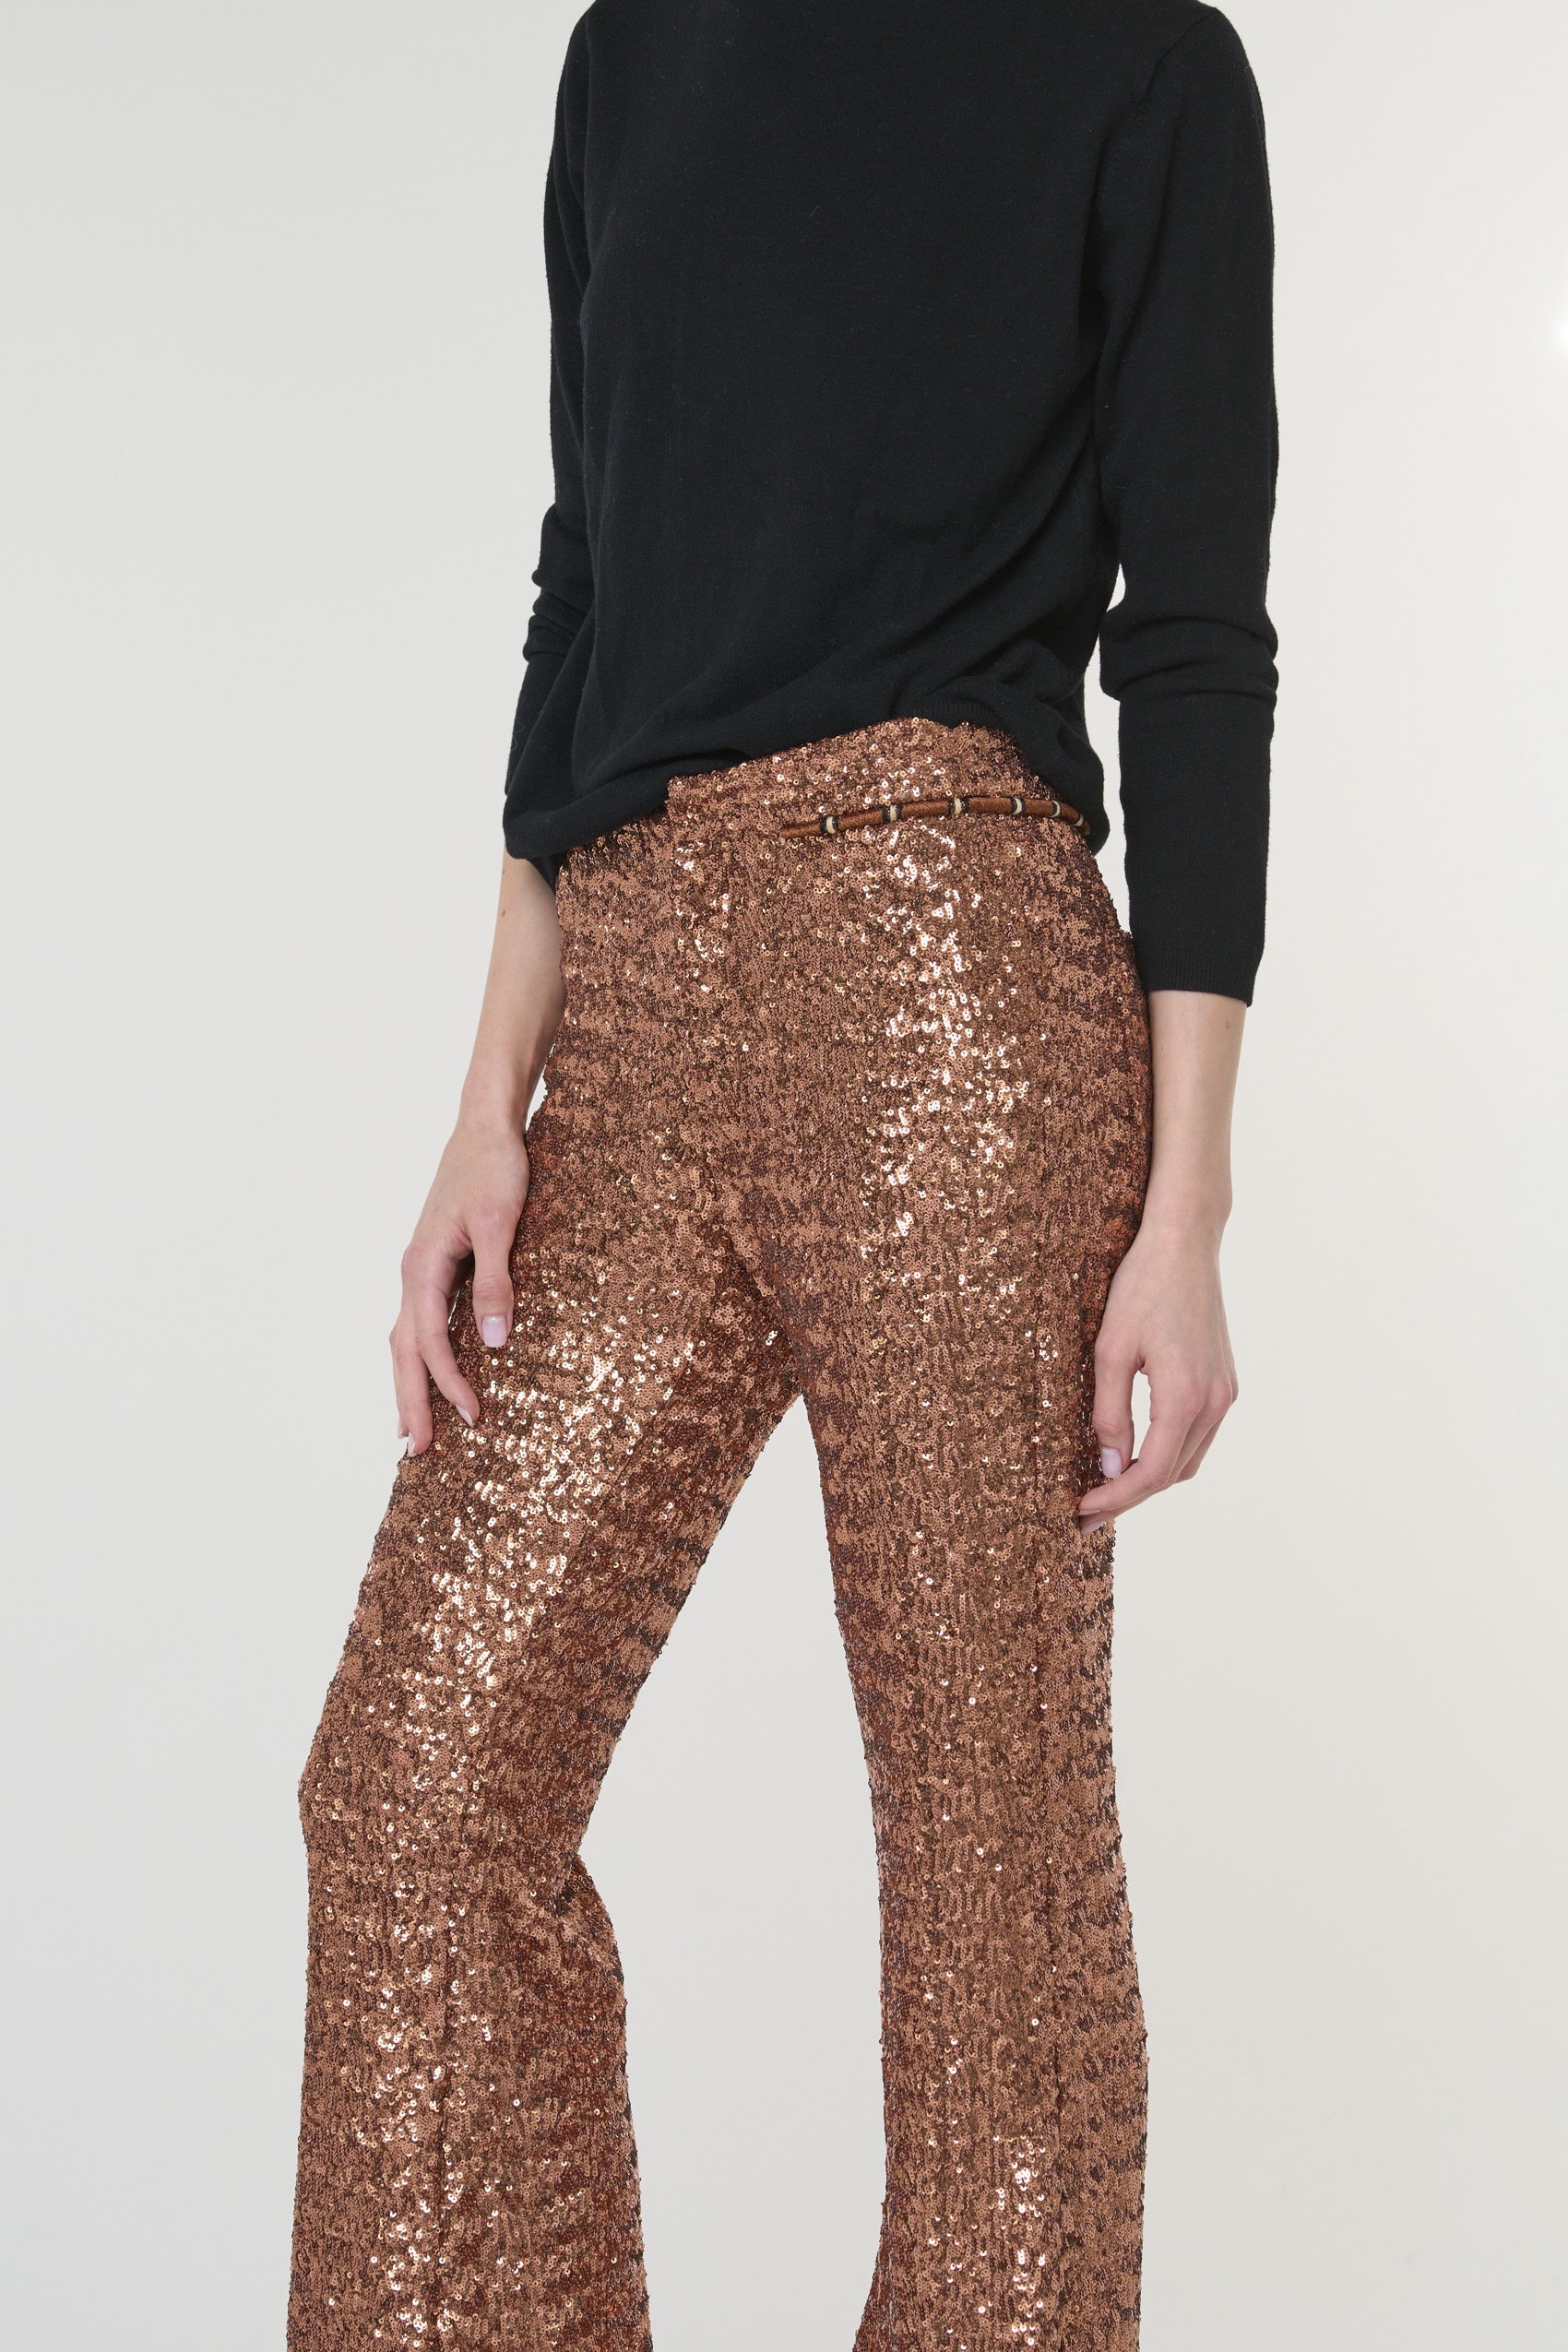 Next SKINNY. - Trousers - gold/gold-coloured - Zalando.de